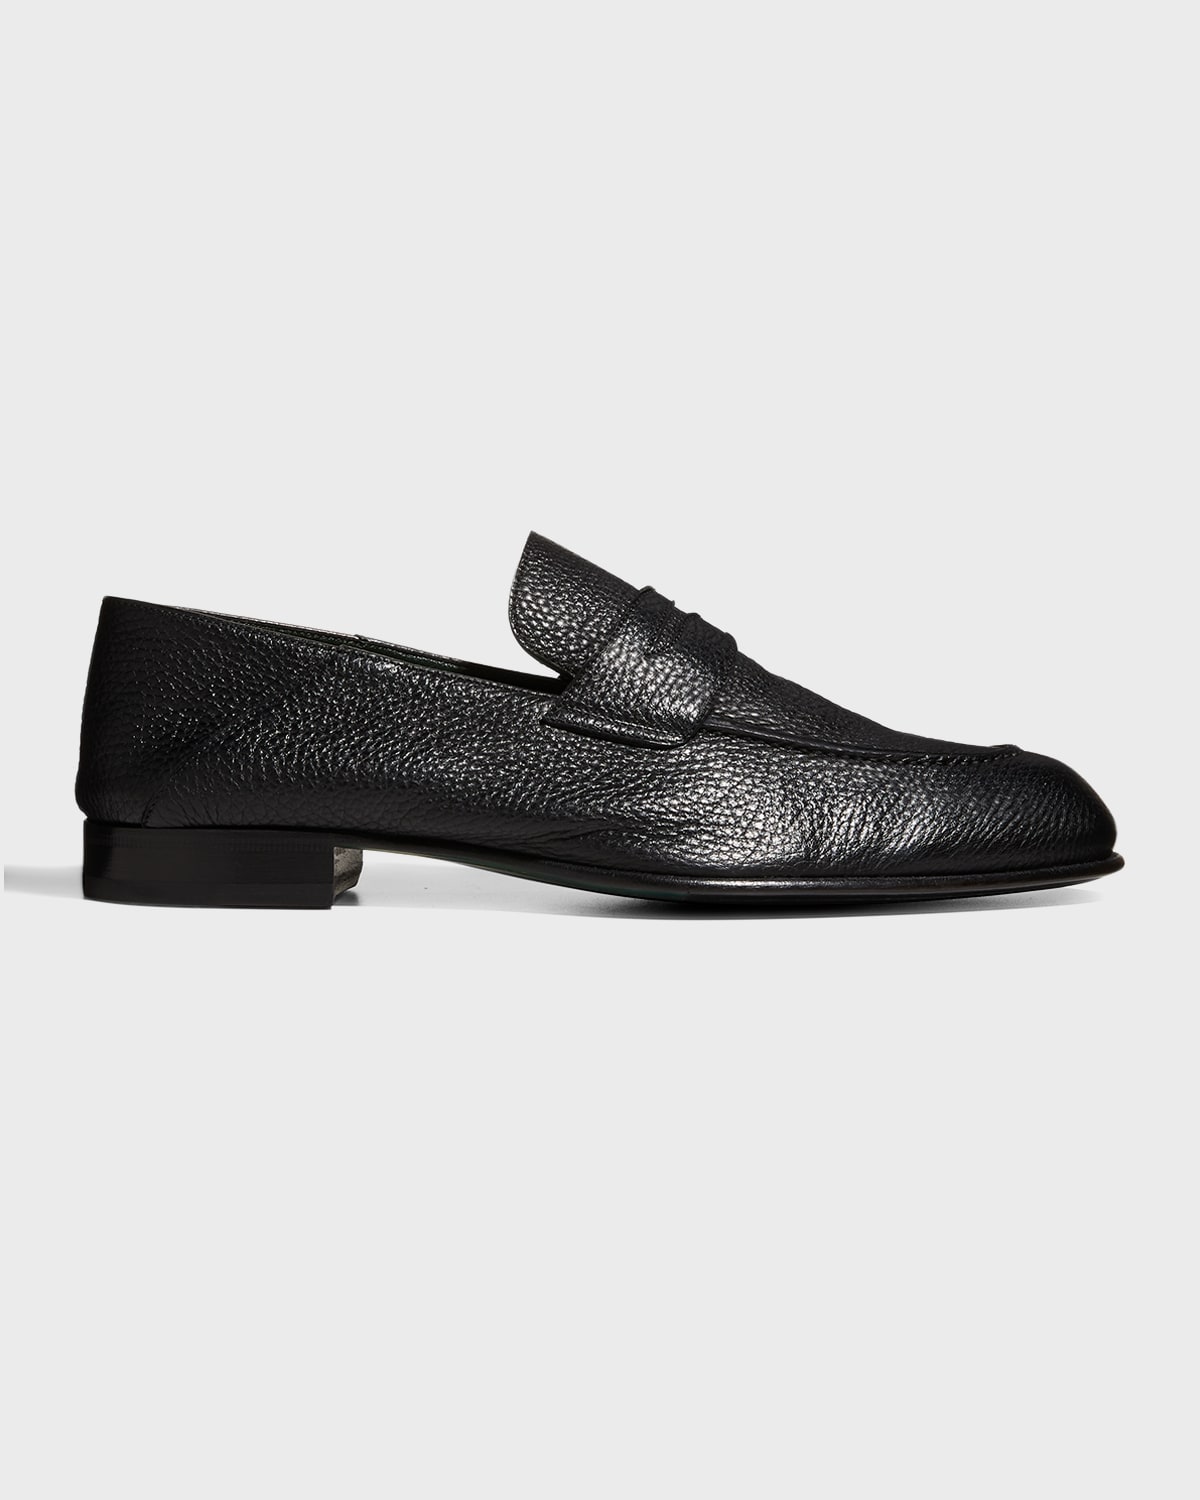 ZEGNA Men's Lasola Leather Penny Loafers | Neiman Marcus